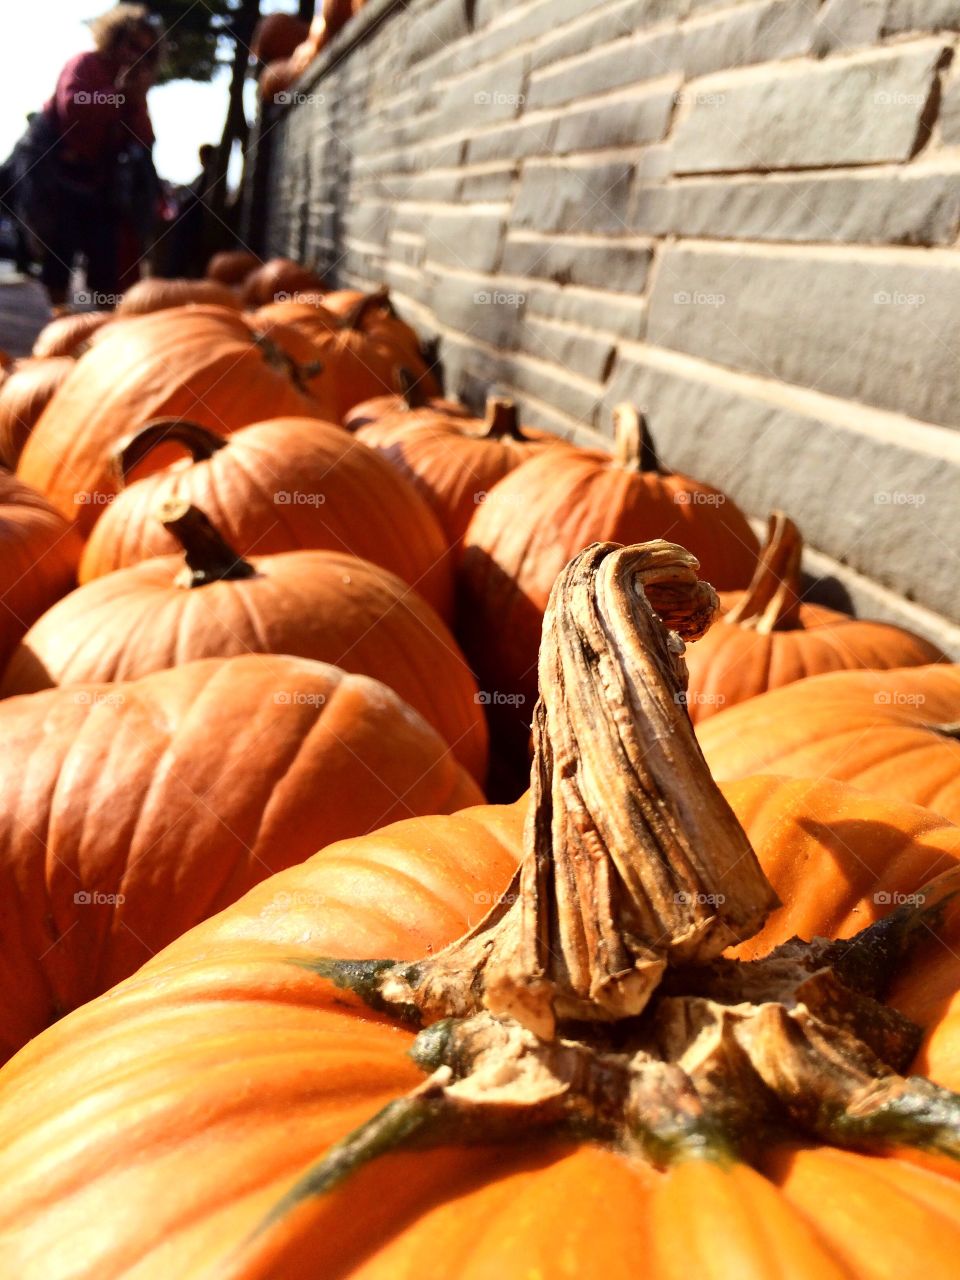 Pumpkin Row.
A bunch of pumpkins ready for the fall season!